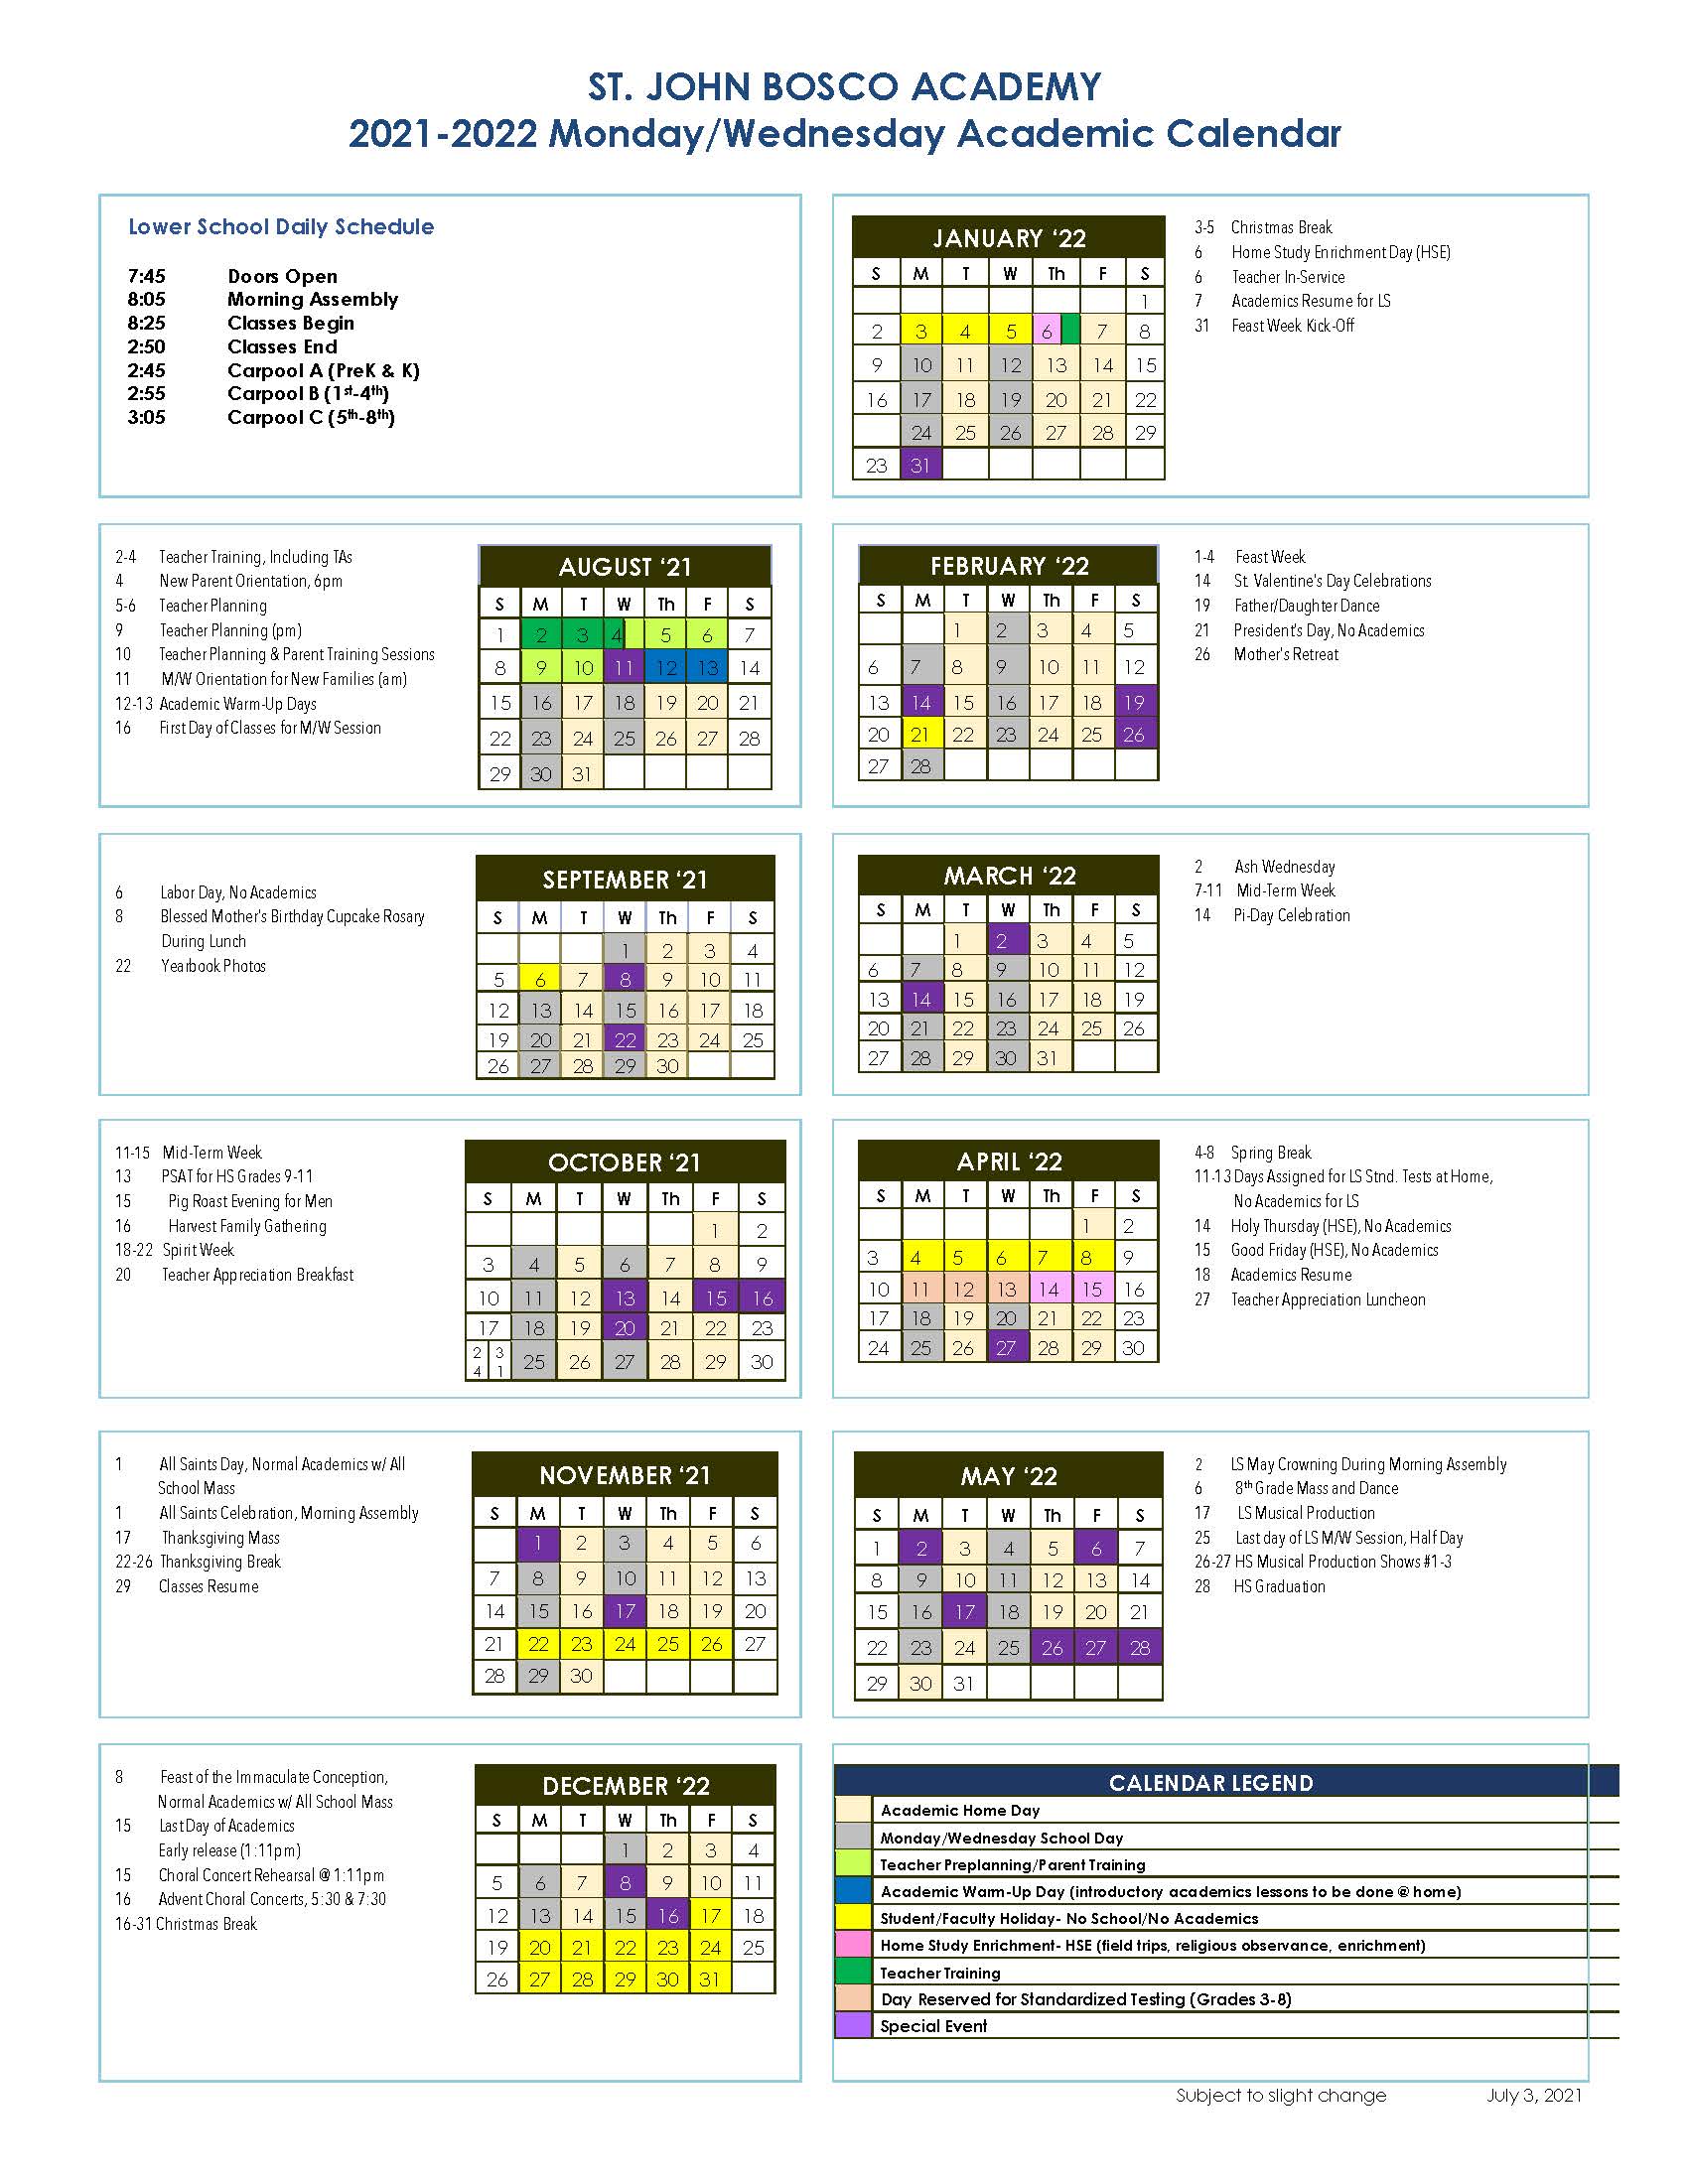 St Johns Academic Calendar 2022 Sjba Mw Academic Calendar 2021-2022 .Jpg | St. John Bosco Academy